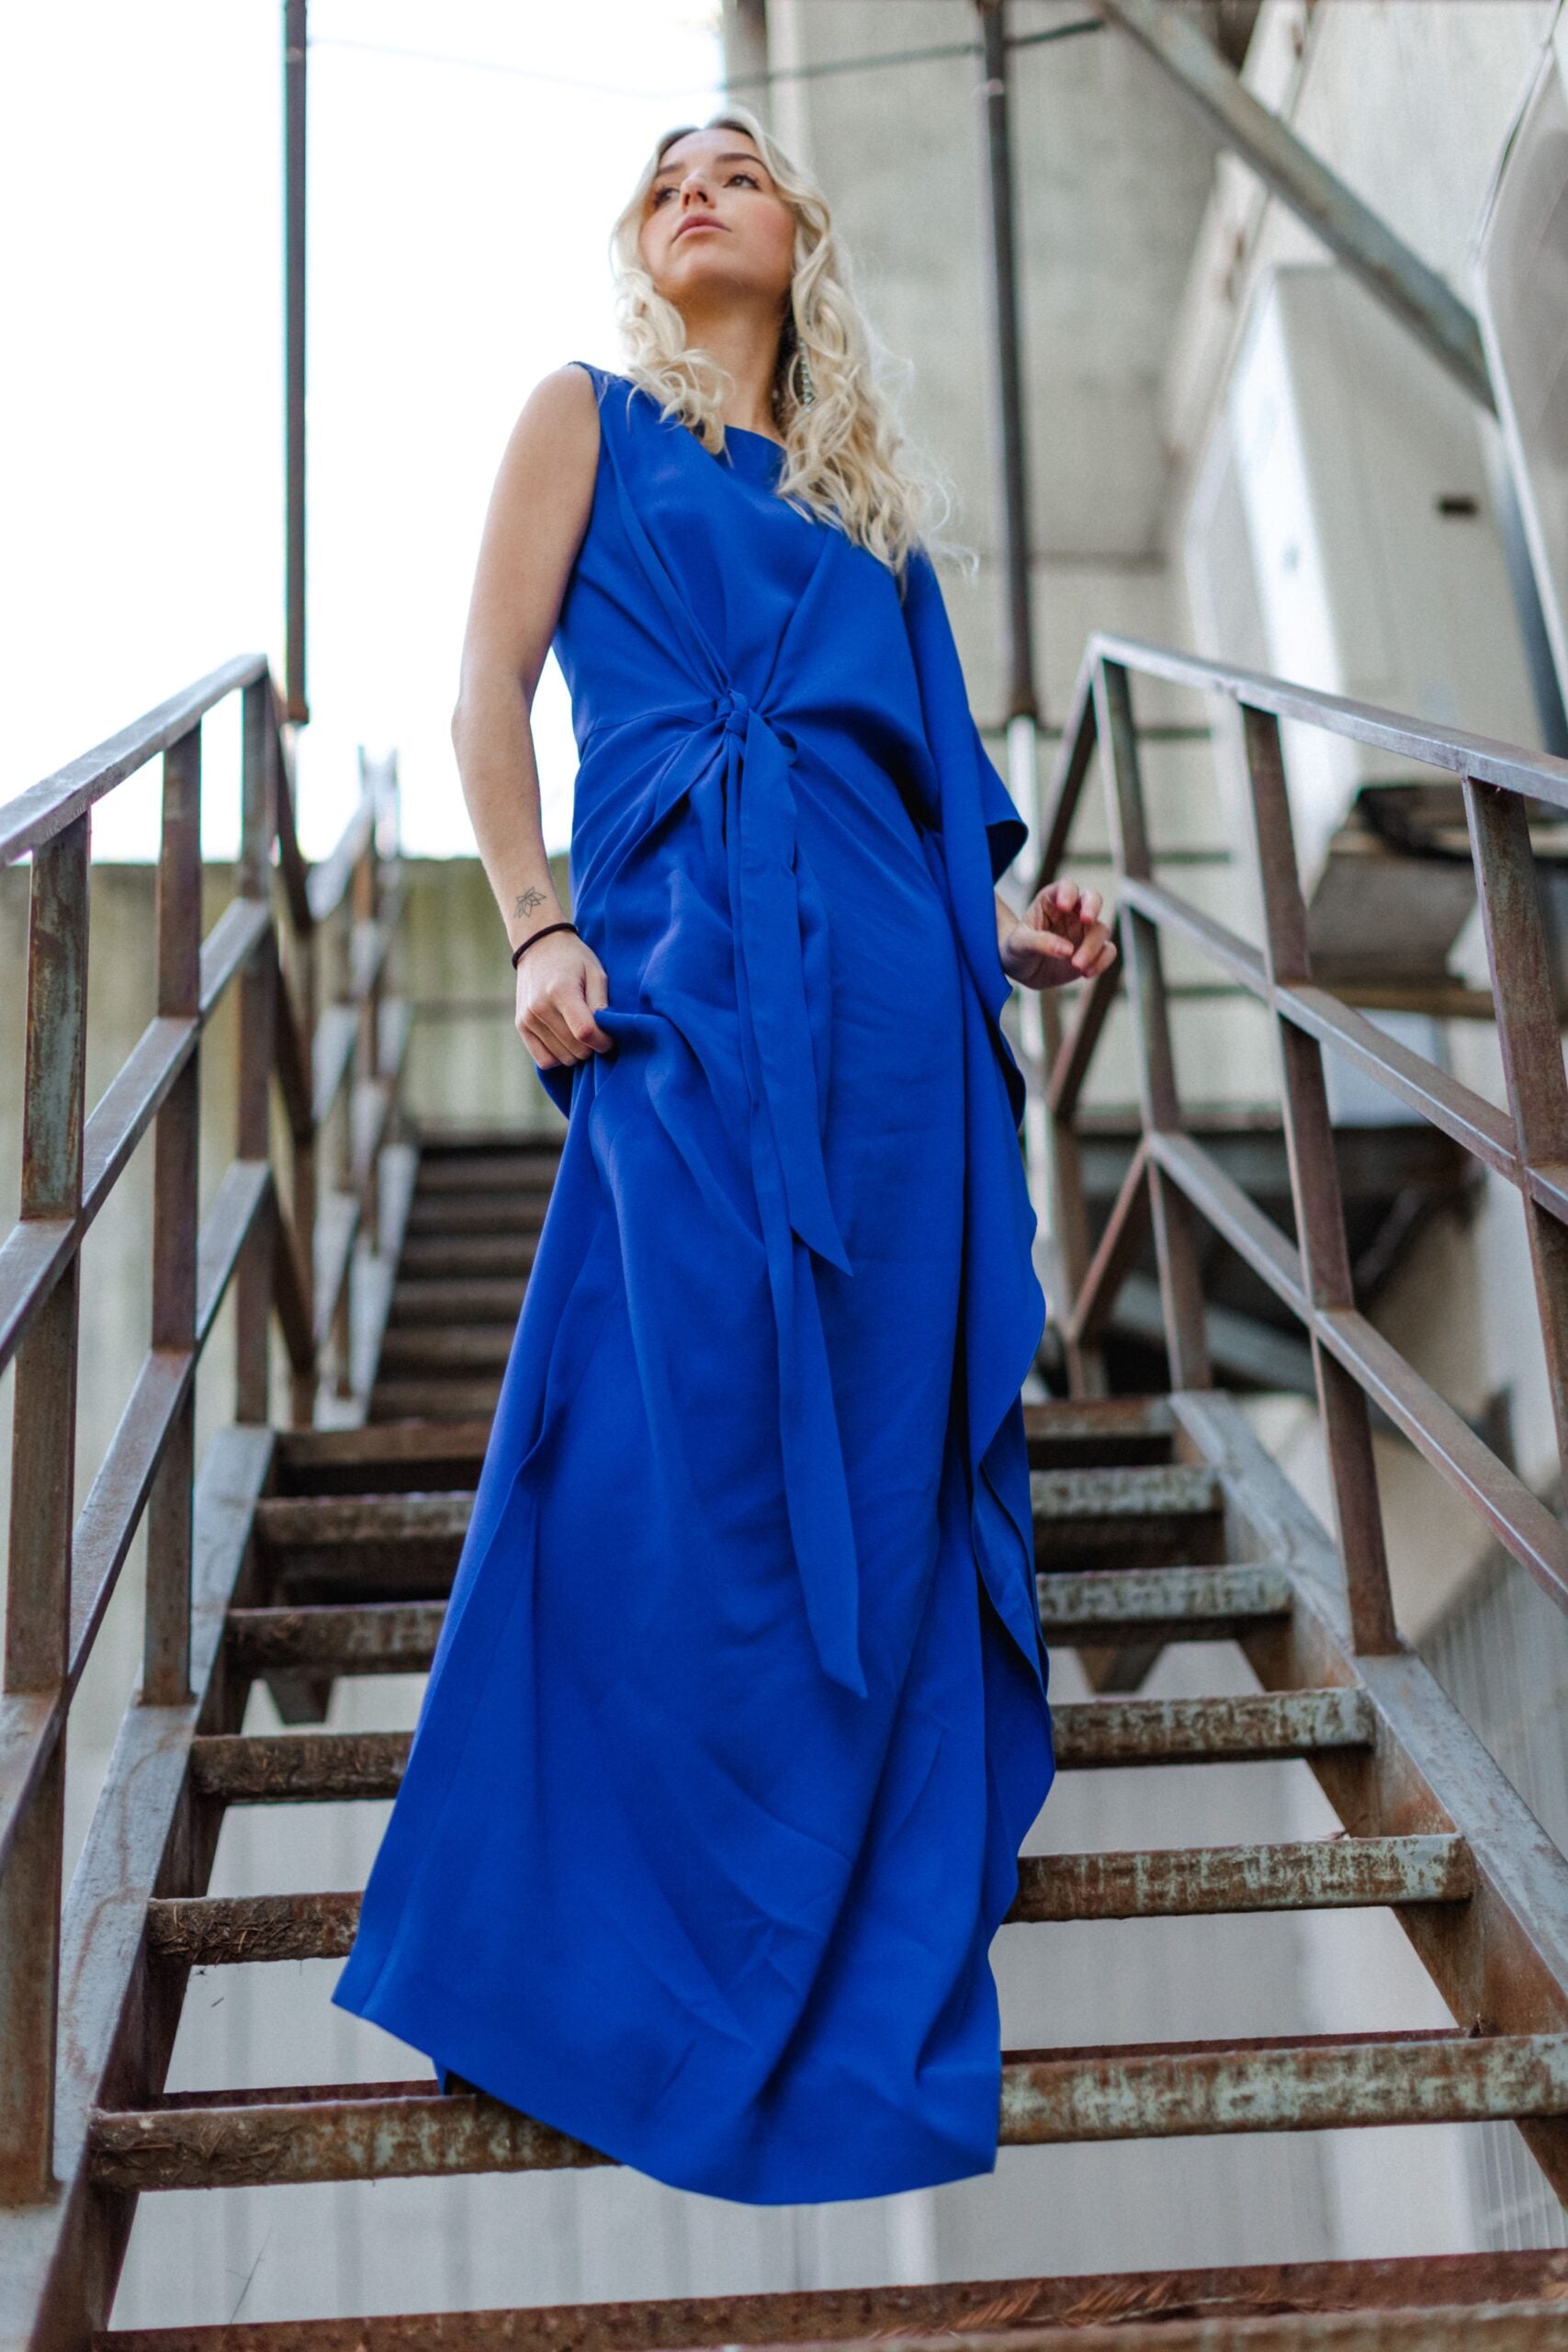 Vestido azul manga asimétrica